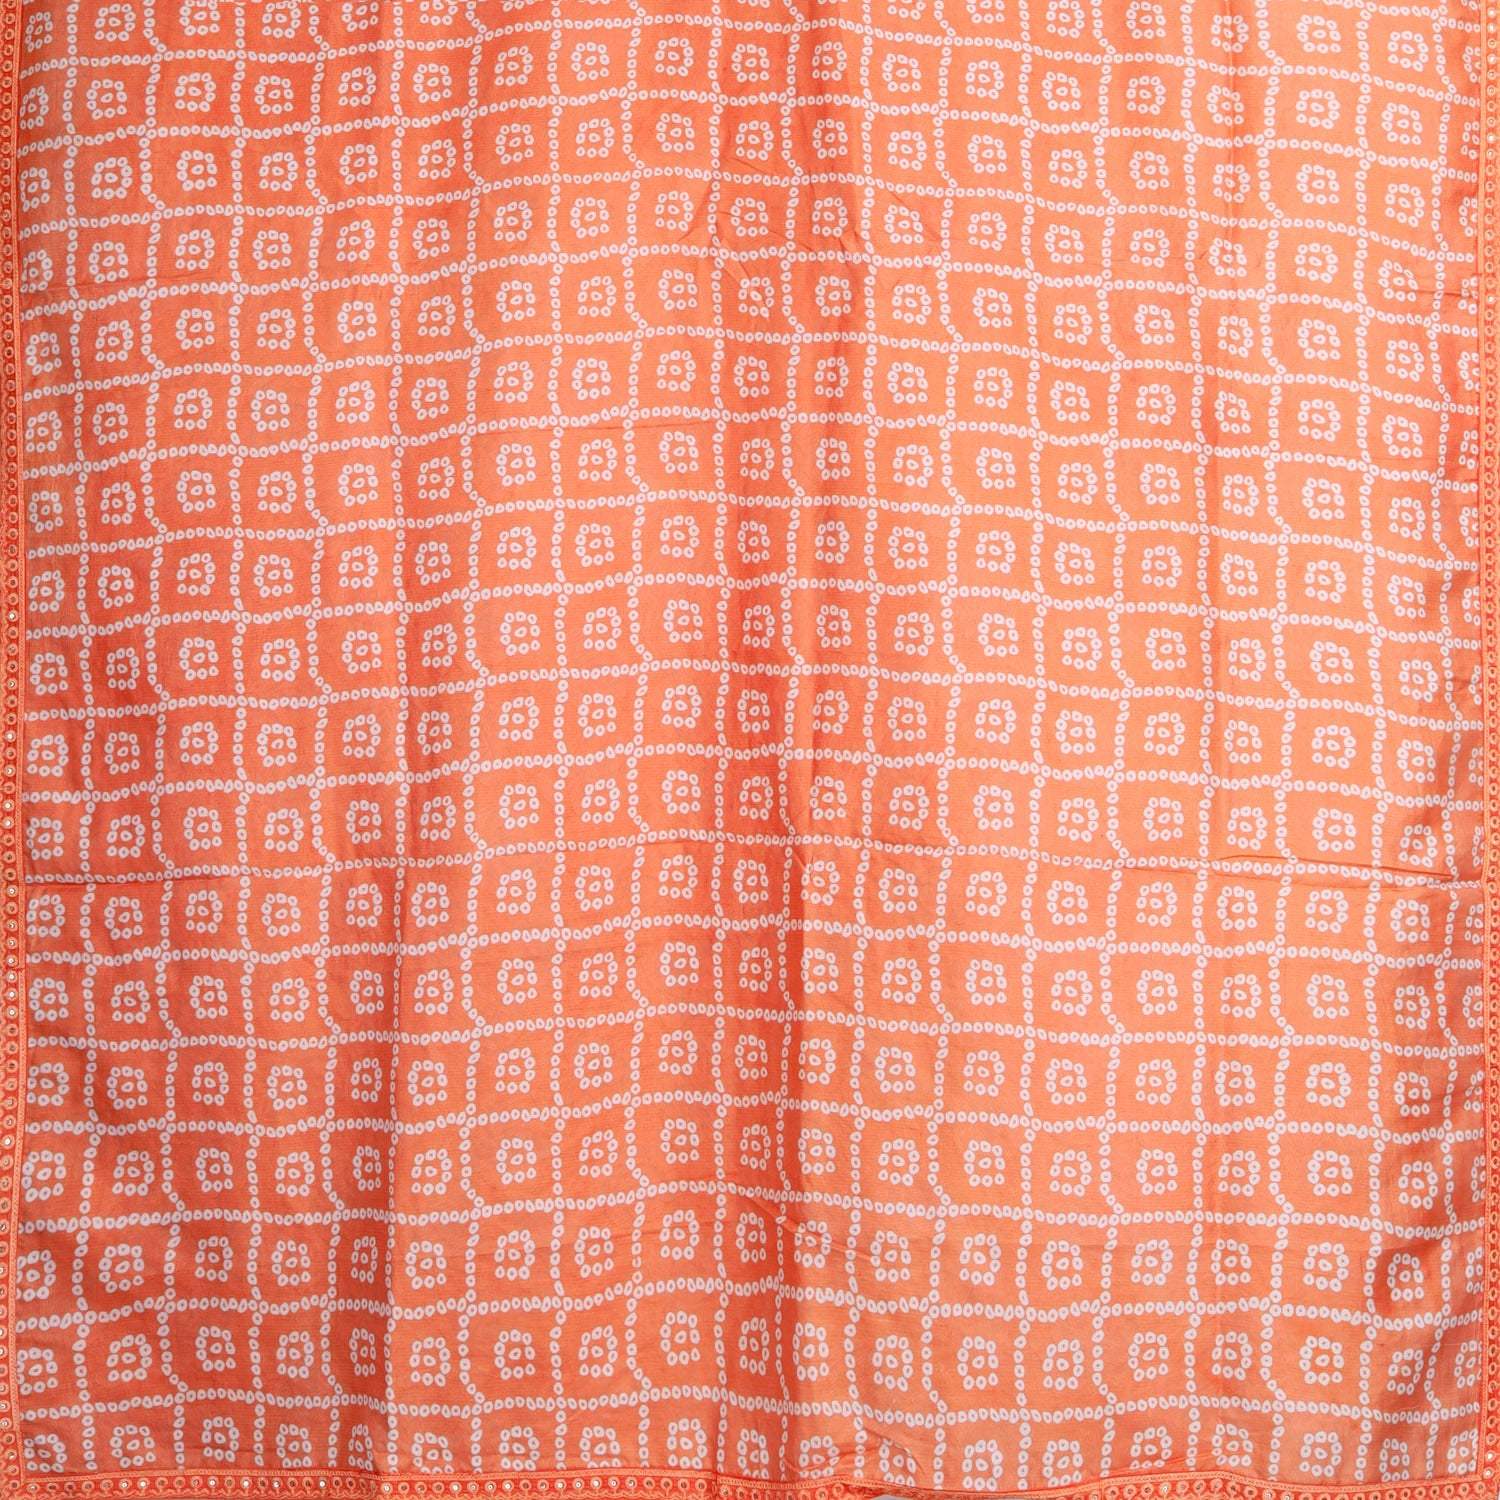 Orange Silk Bandhani Printed Saree - Singhania's